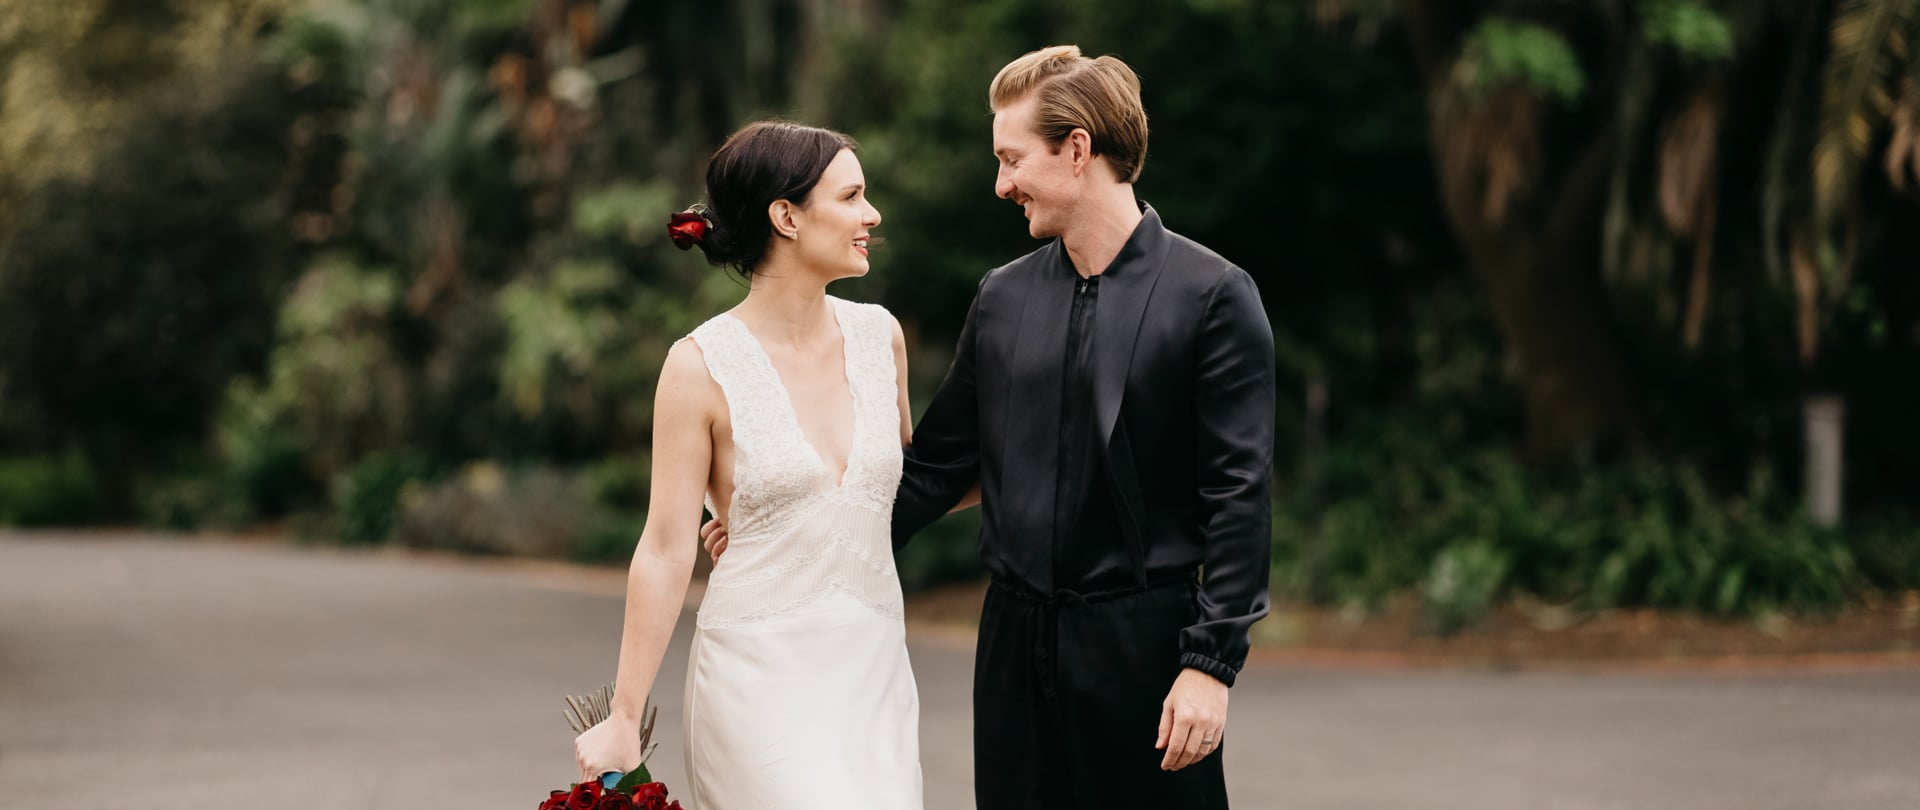 Cameron & Polly Wedding Video Filmed atMelbourne,Victoria